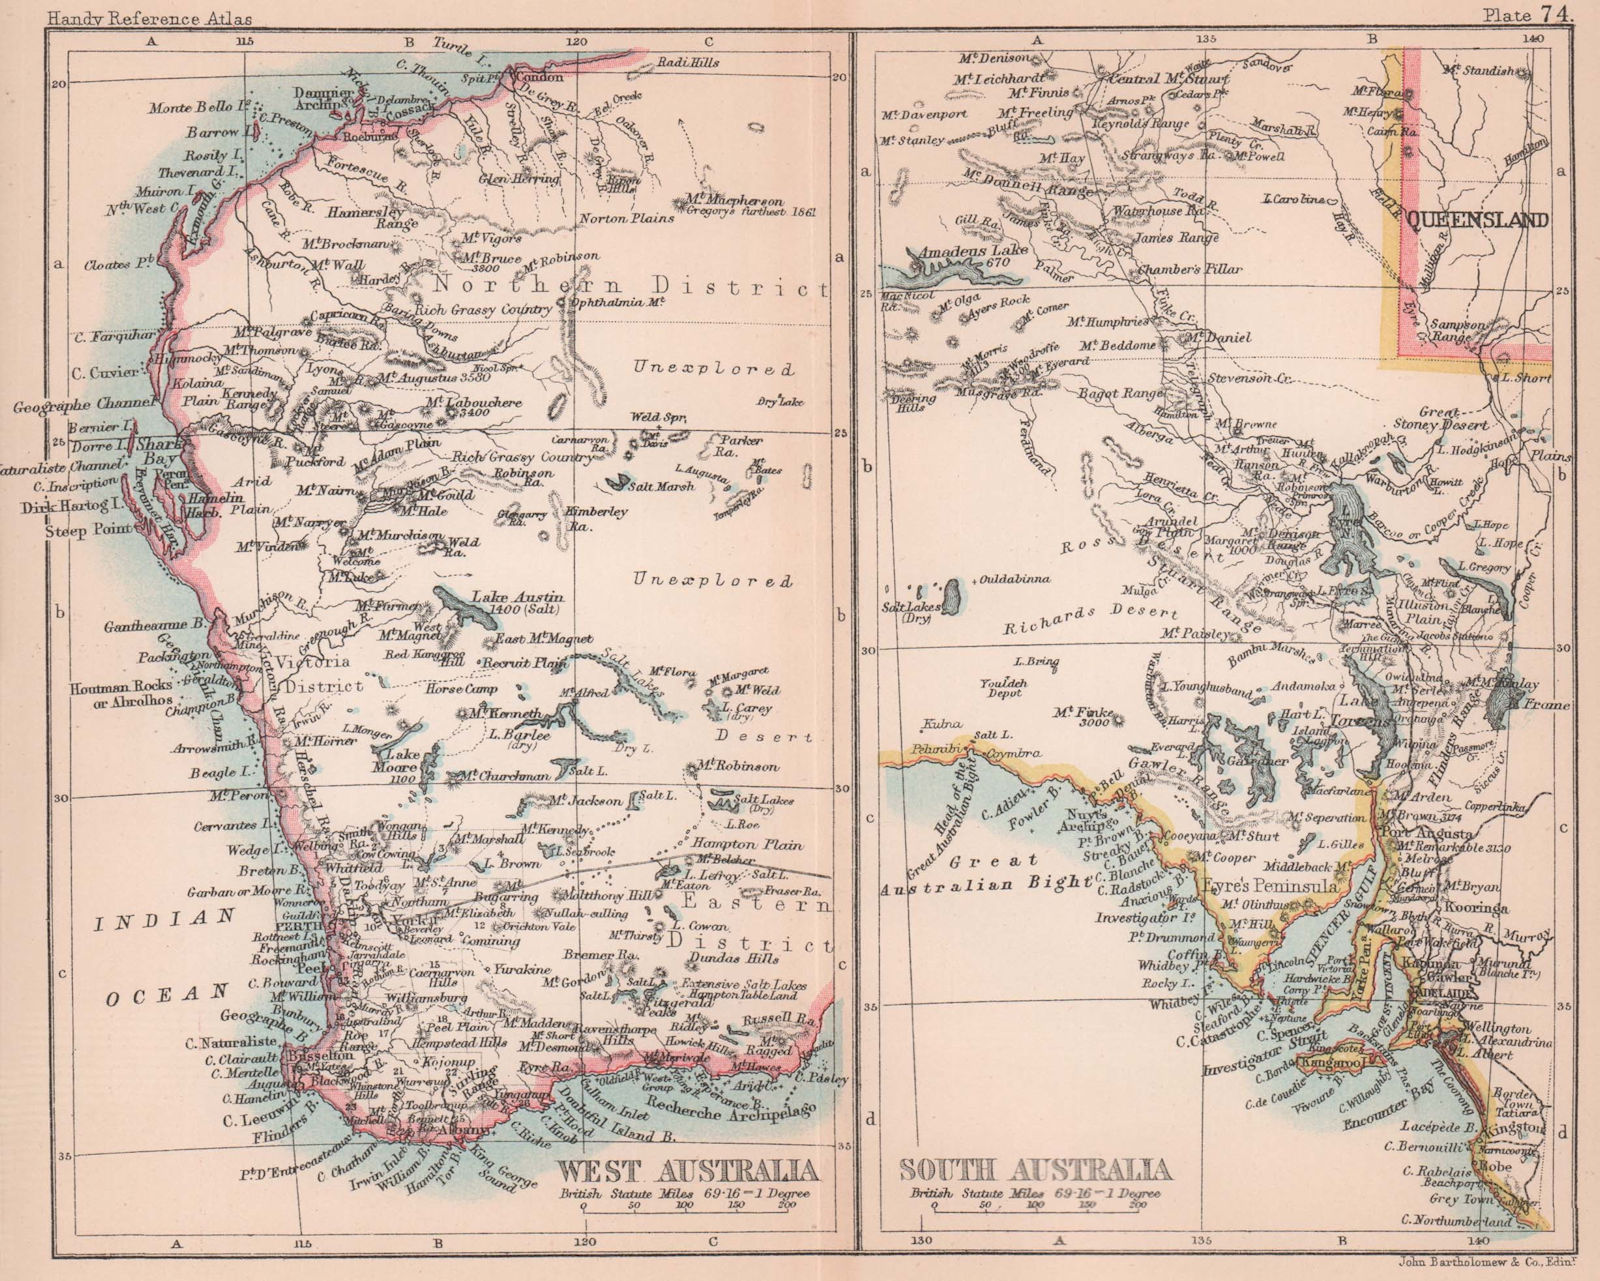 Associate Product Western Australia & South Australia. BARTHOLOMEW 1893 old antique map chart